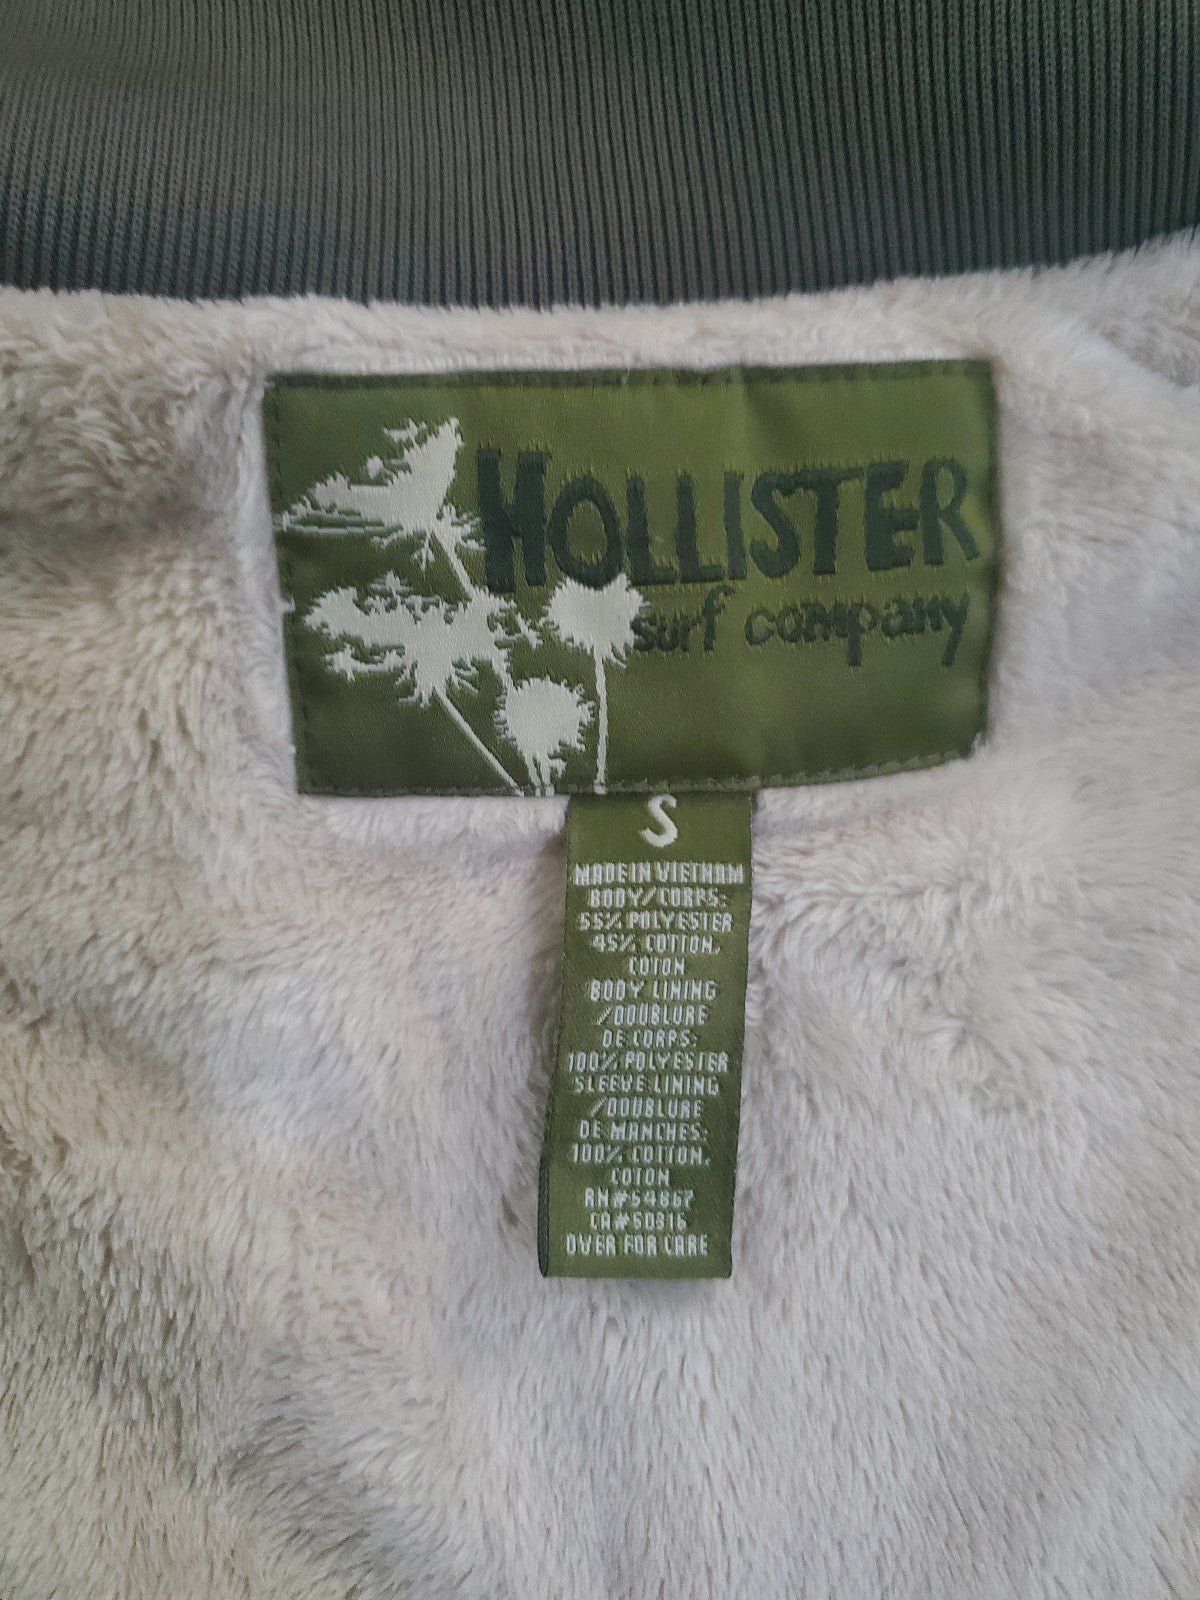 Authentic Hollister vintage zip up green sweatshirt with soft interior Size Small j1lflIuCw online store